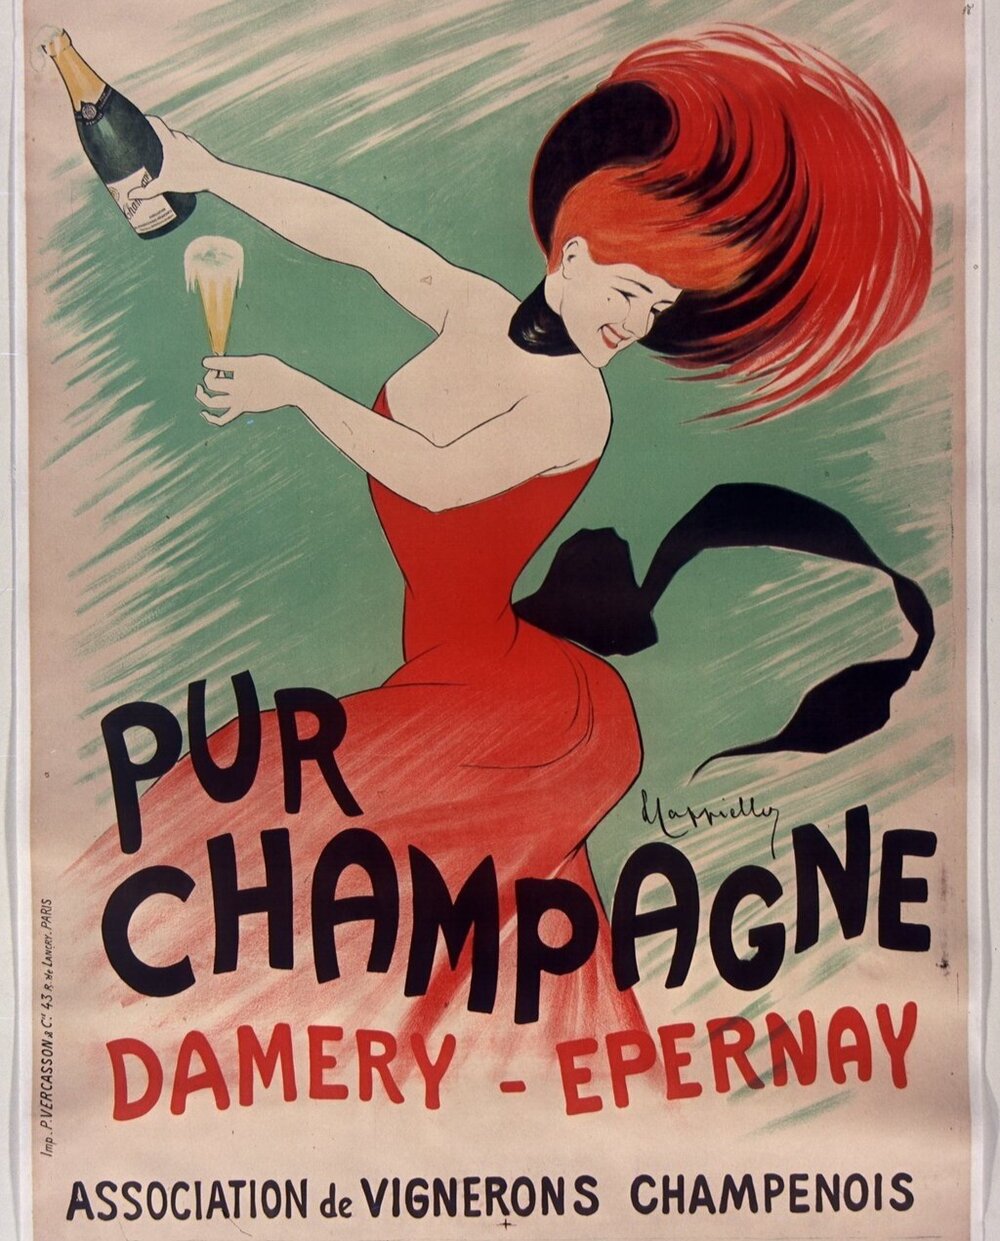 Pur_champagne_Damery-Epernay_association_de_%5B...%5DCappiello_Leonetto_btv1b90150857.jpg